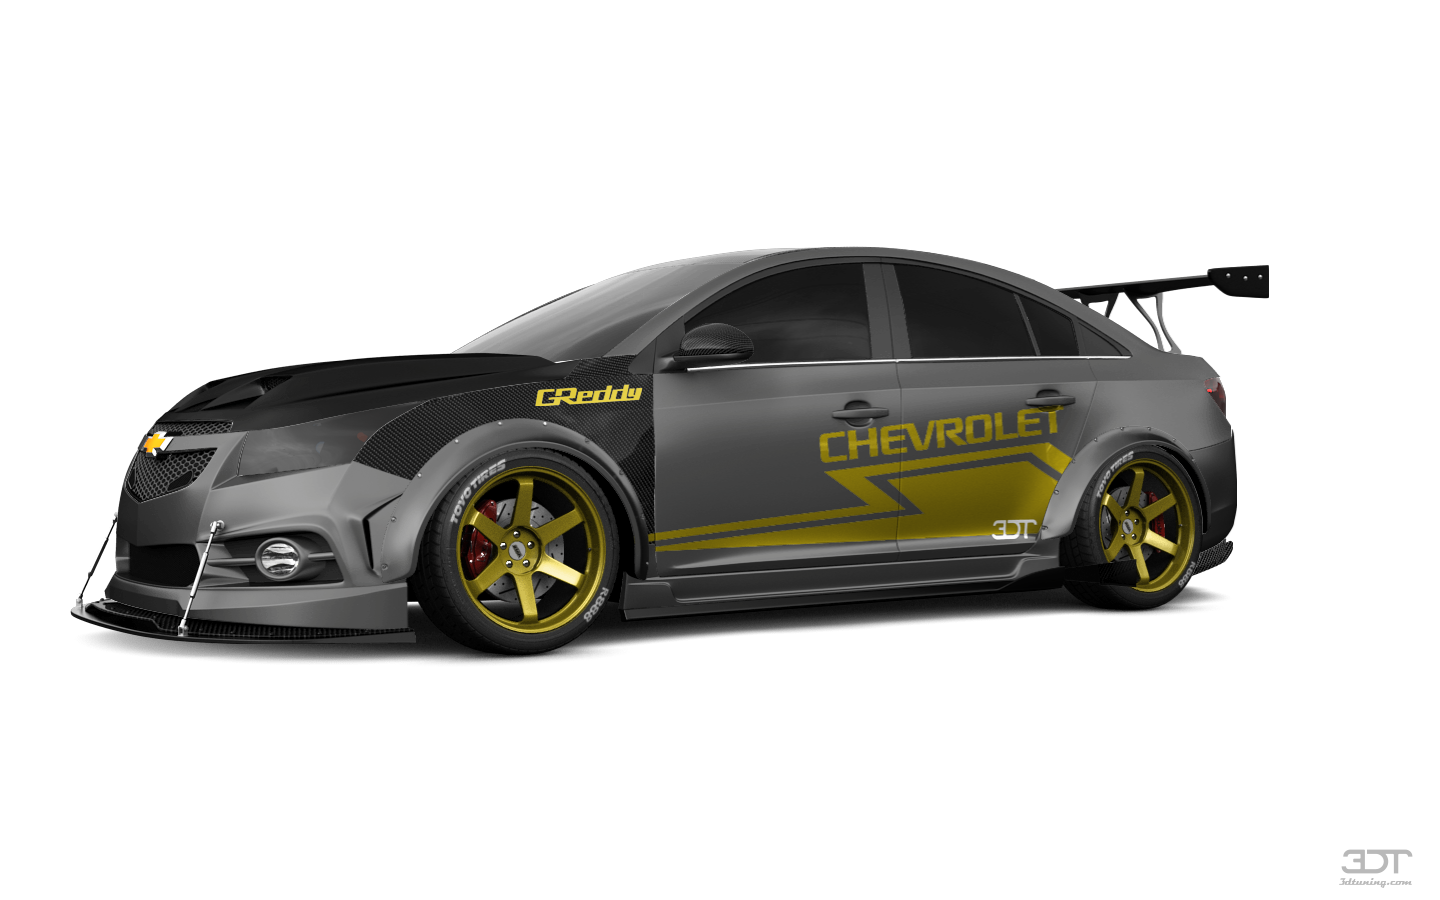 Chevrolet Cruze Sedan 2012